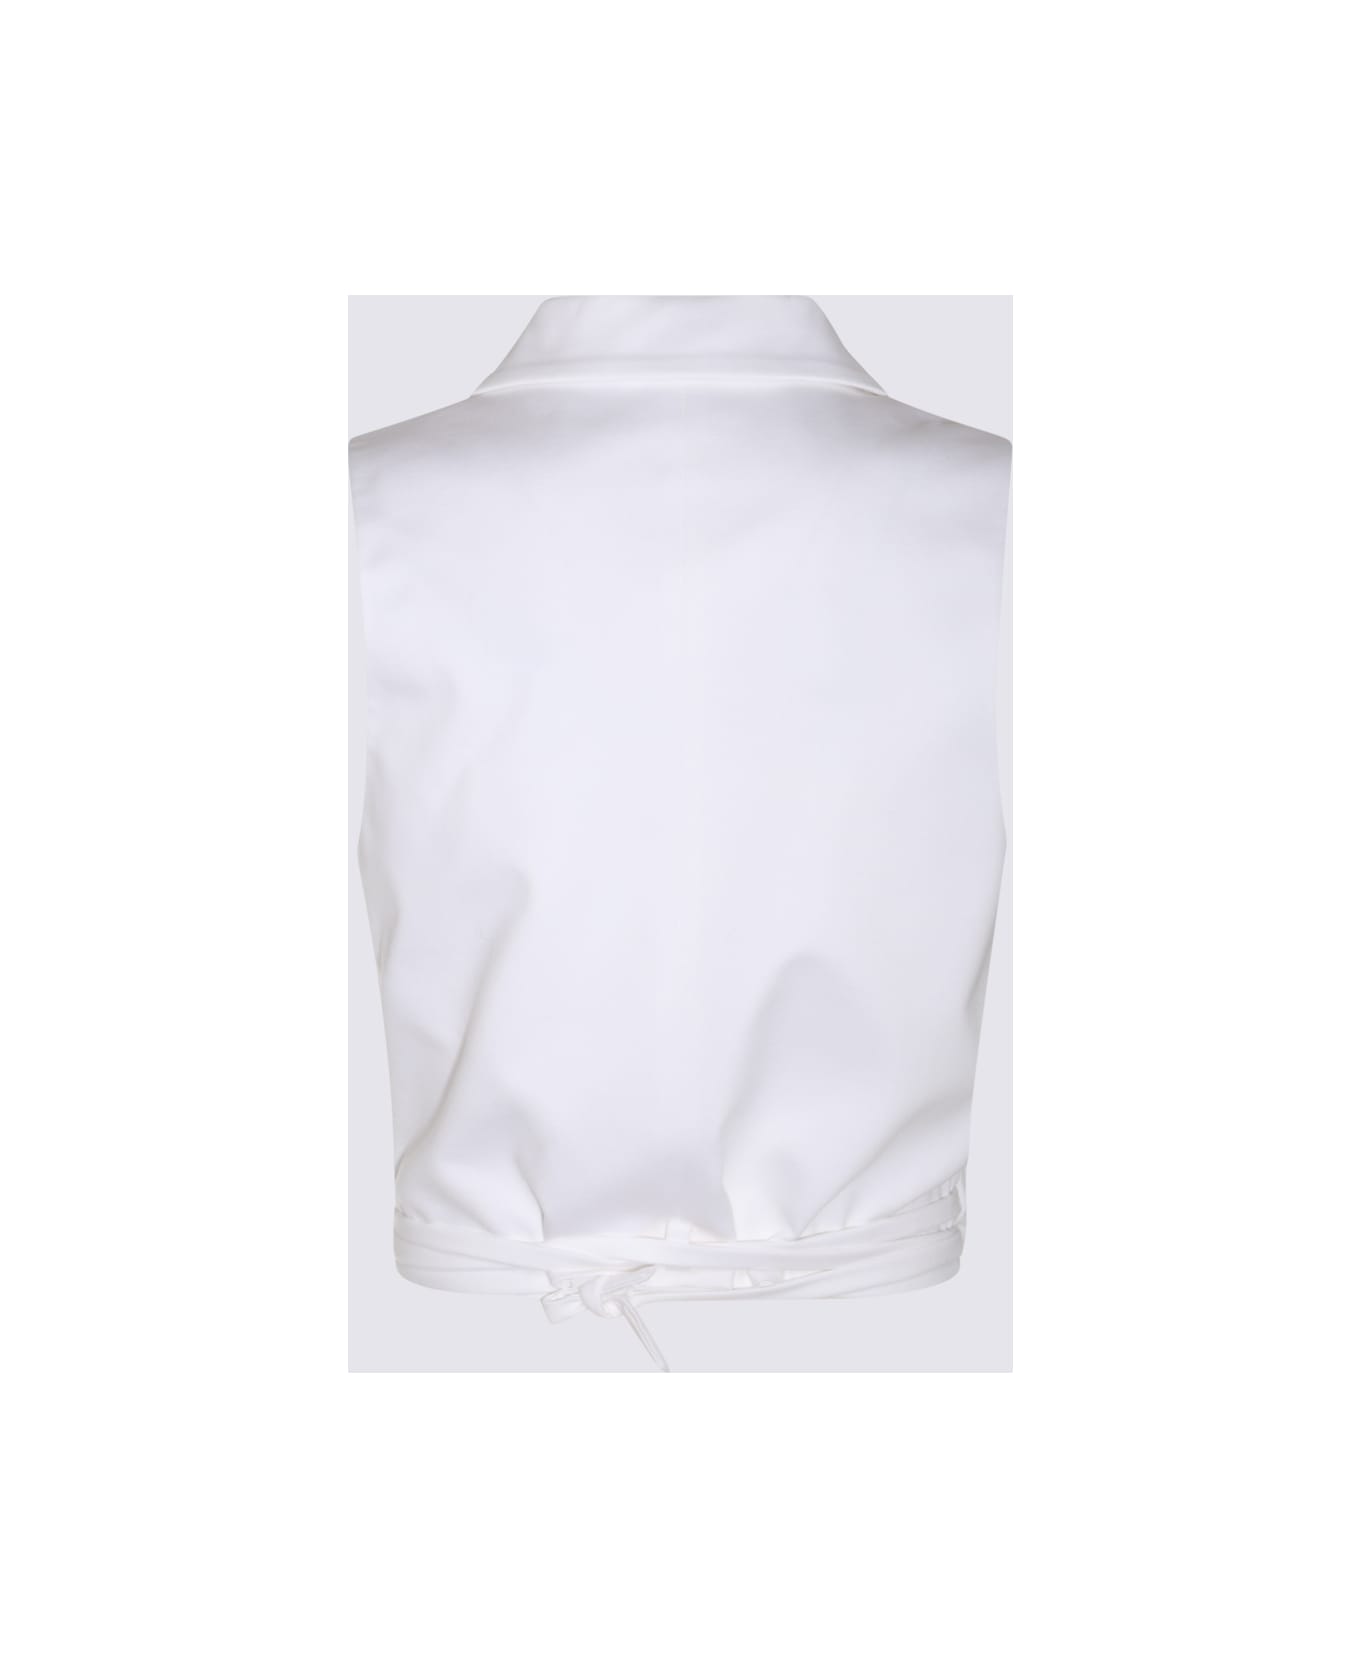 Brunello Cucinelli White Cotton T-shirt